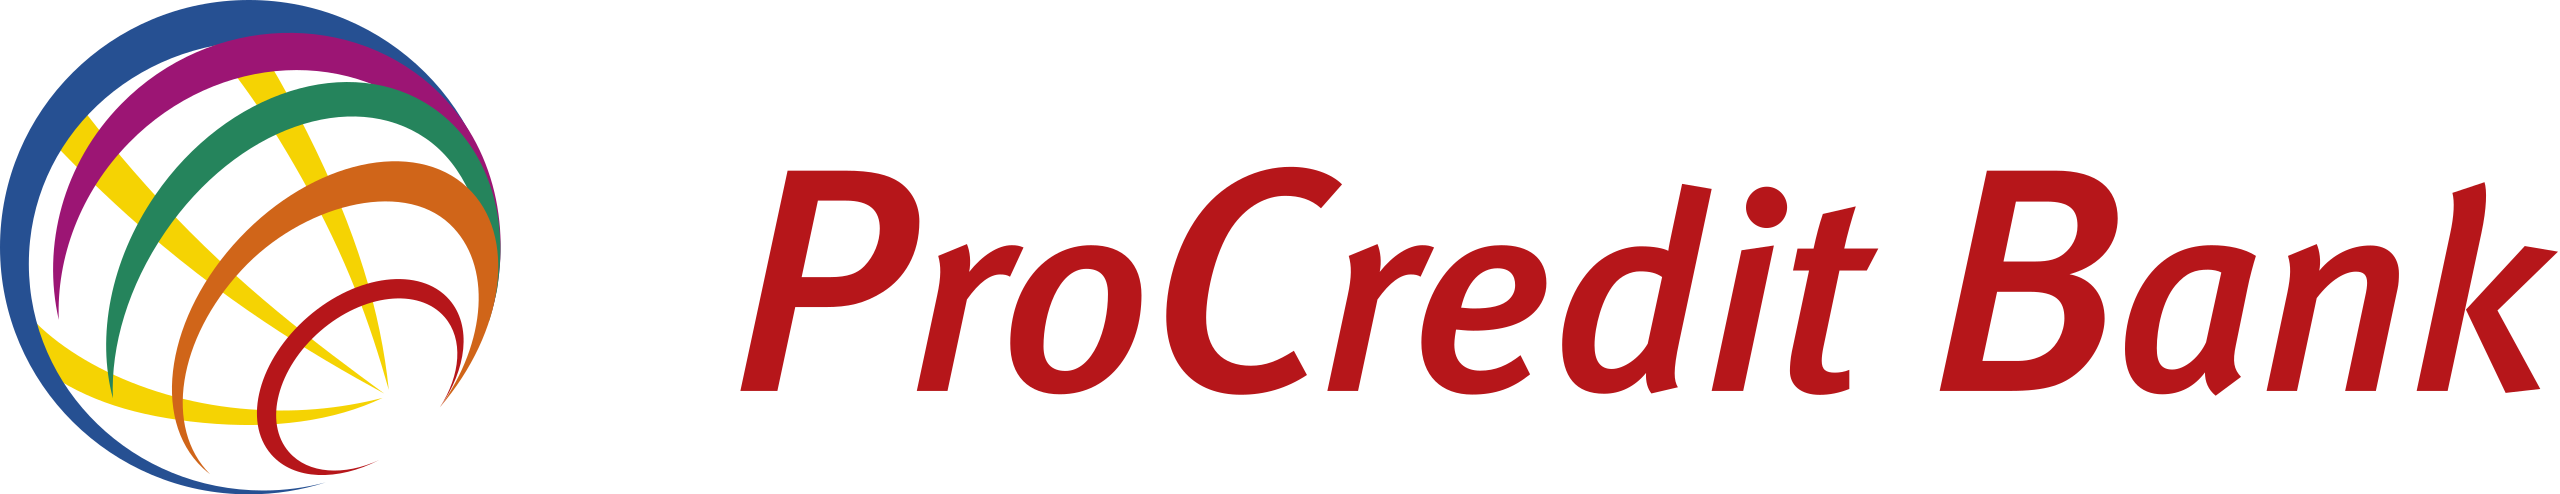 Procredit Bank Logo